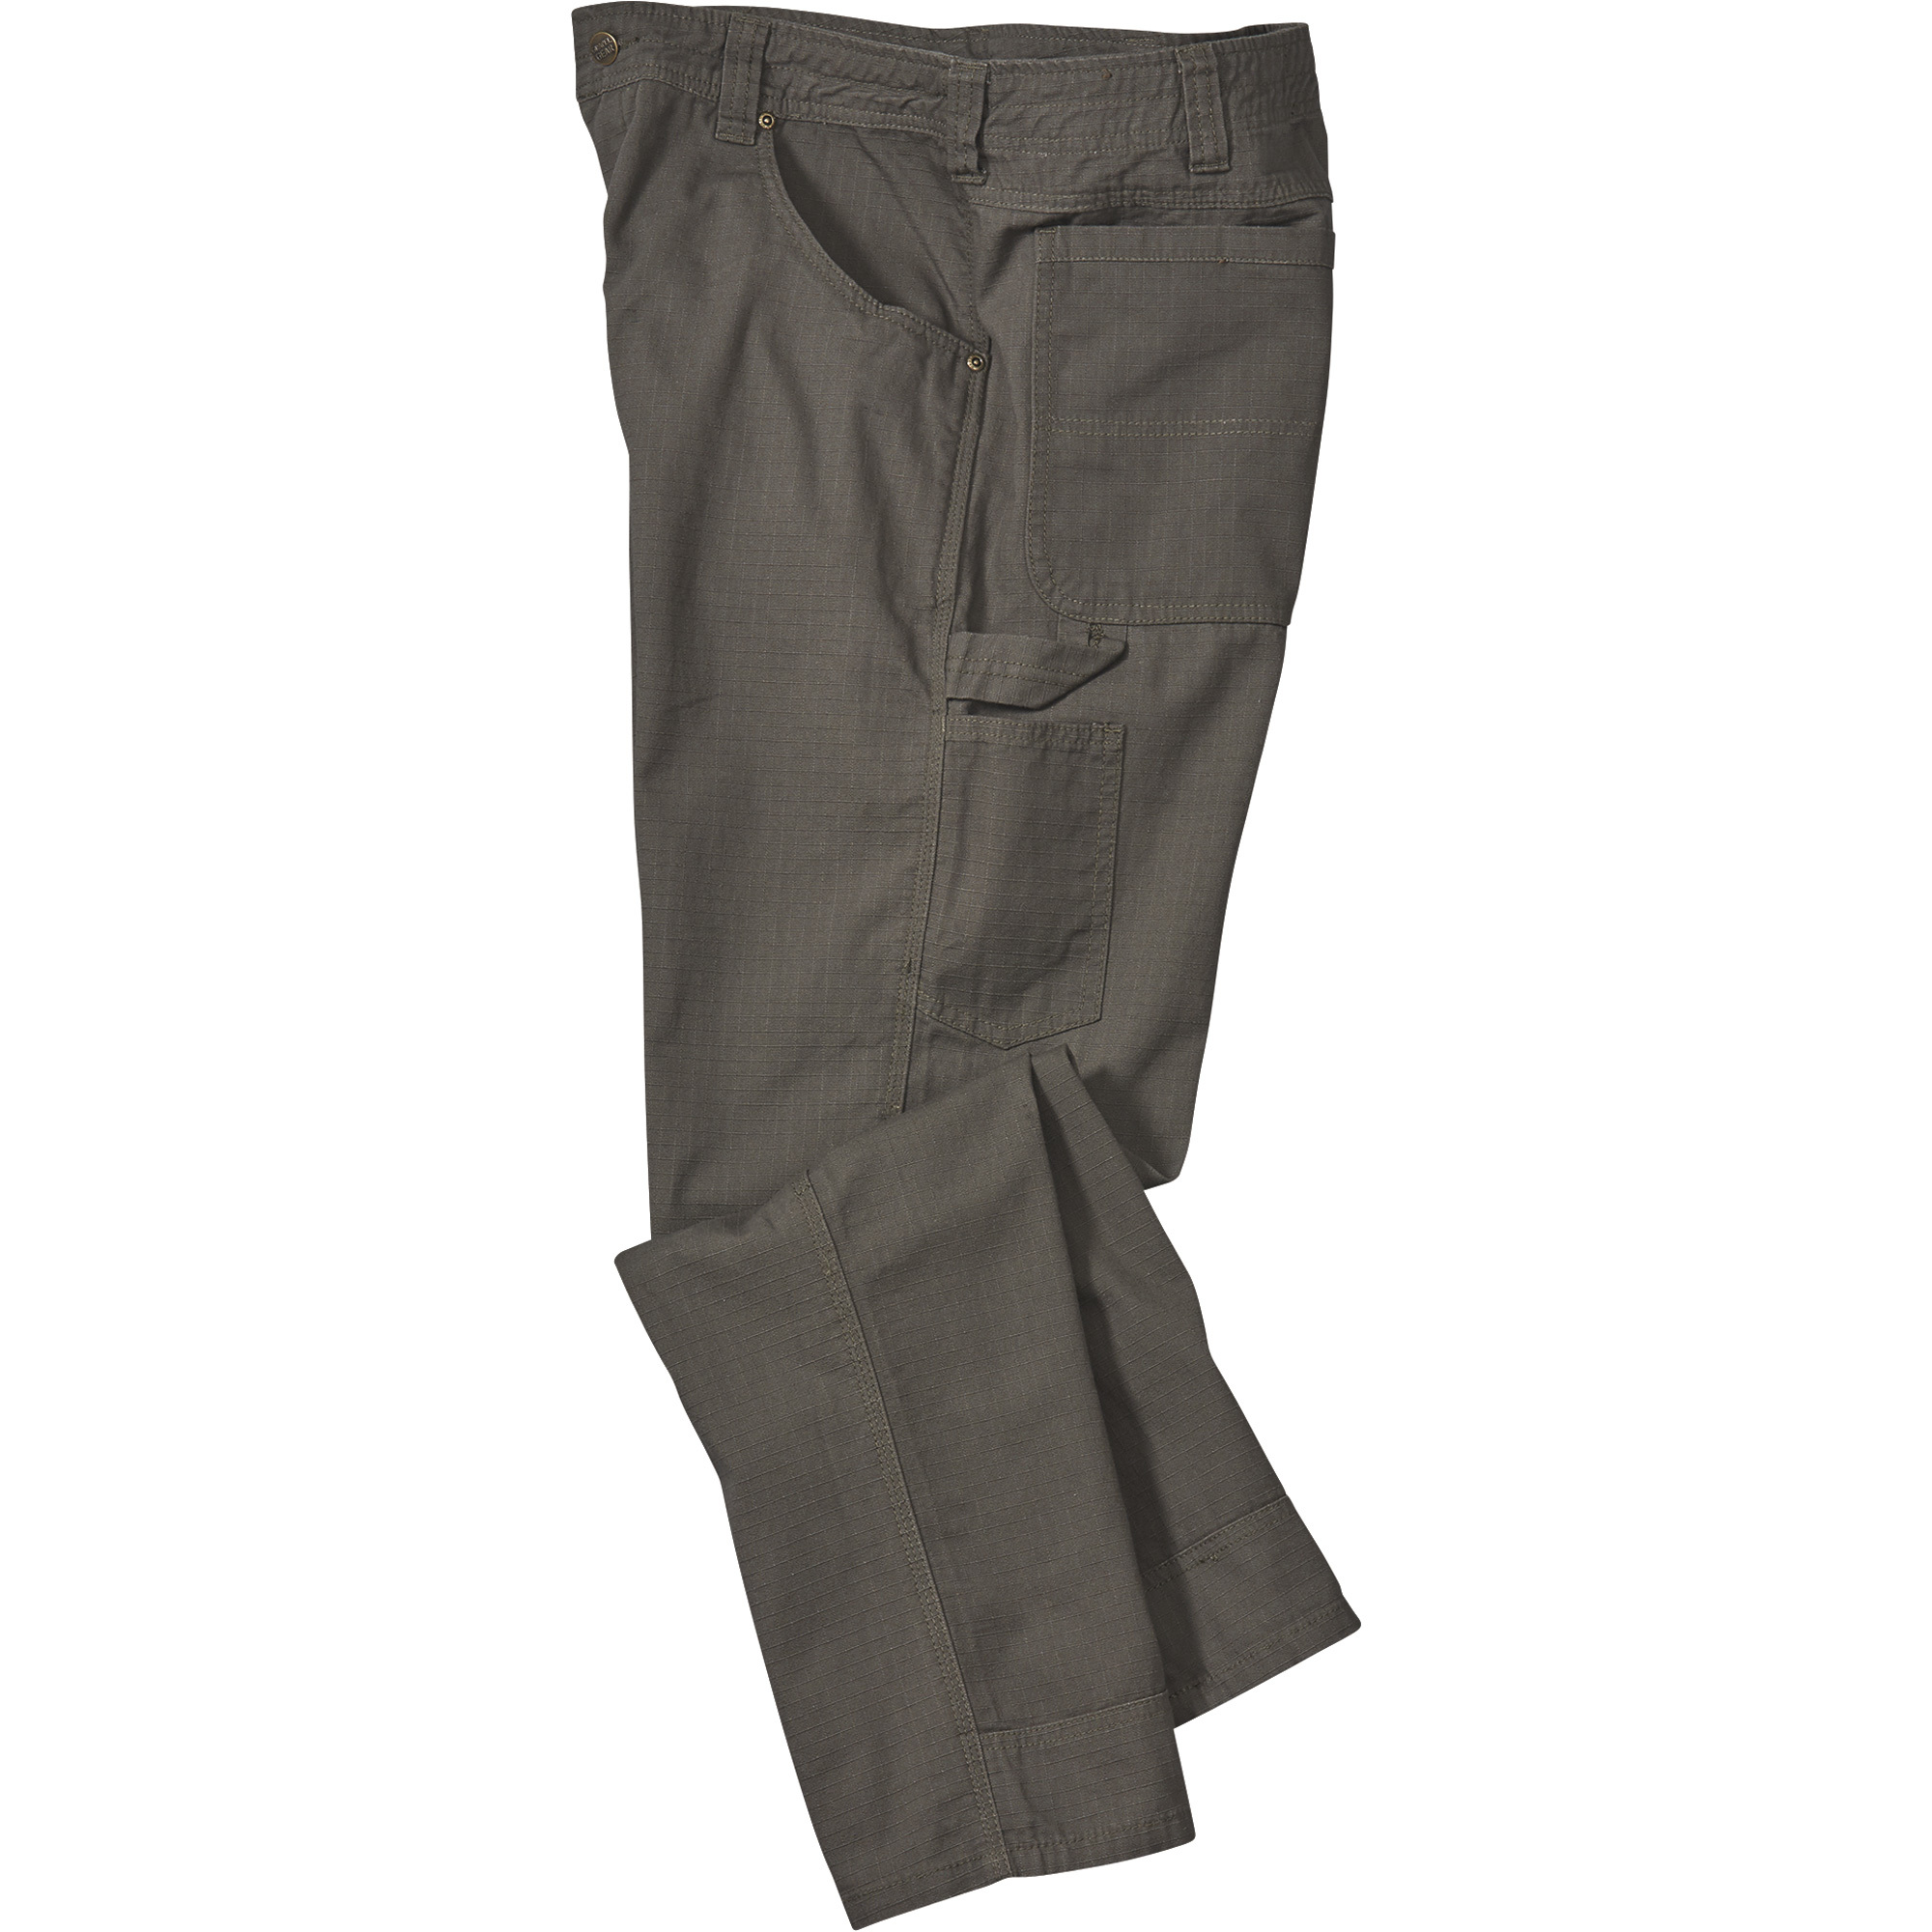 Gravel Gear Men's Cotton Ripstop Carpenter Pants with Teflon Fabric Protector â Moss, 34Inch Waist x 34Inch Inseam